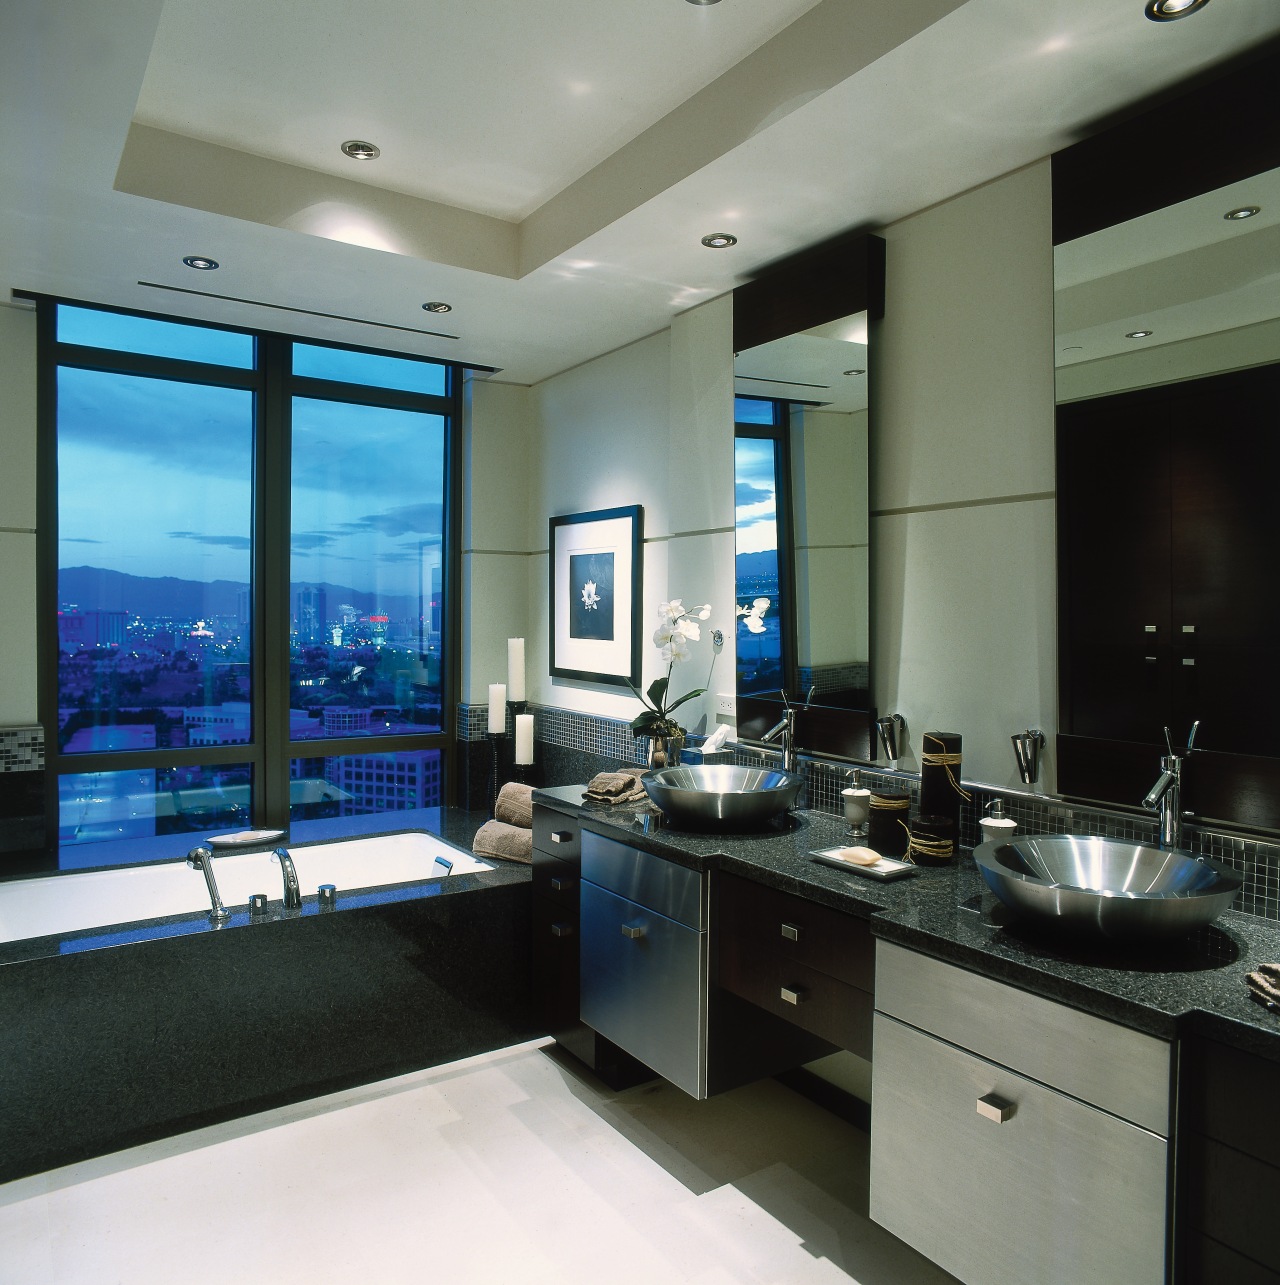 View of this modern bathroom countertop, interior design, kitchen, gray, black